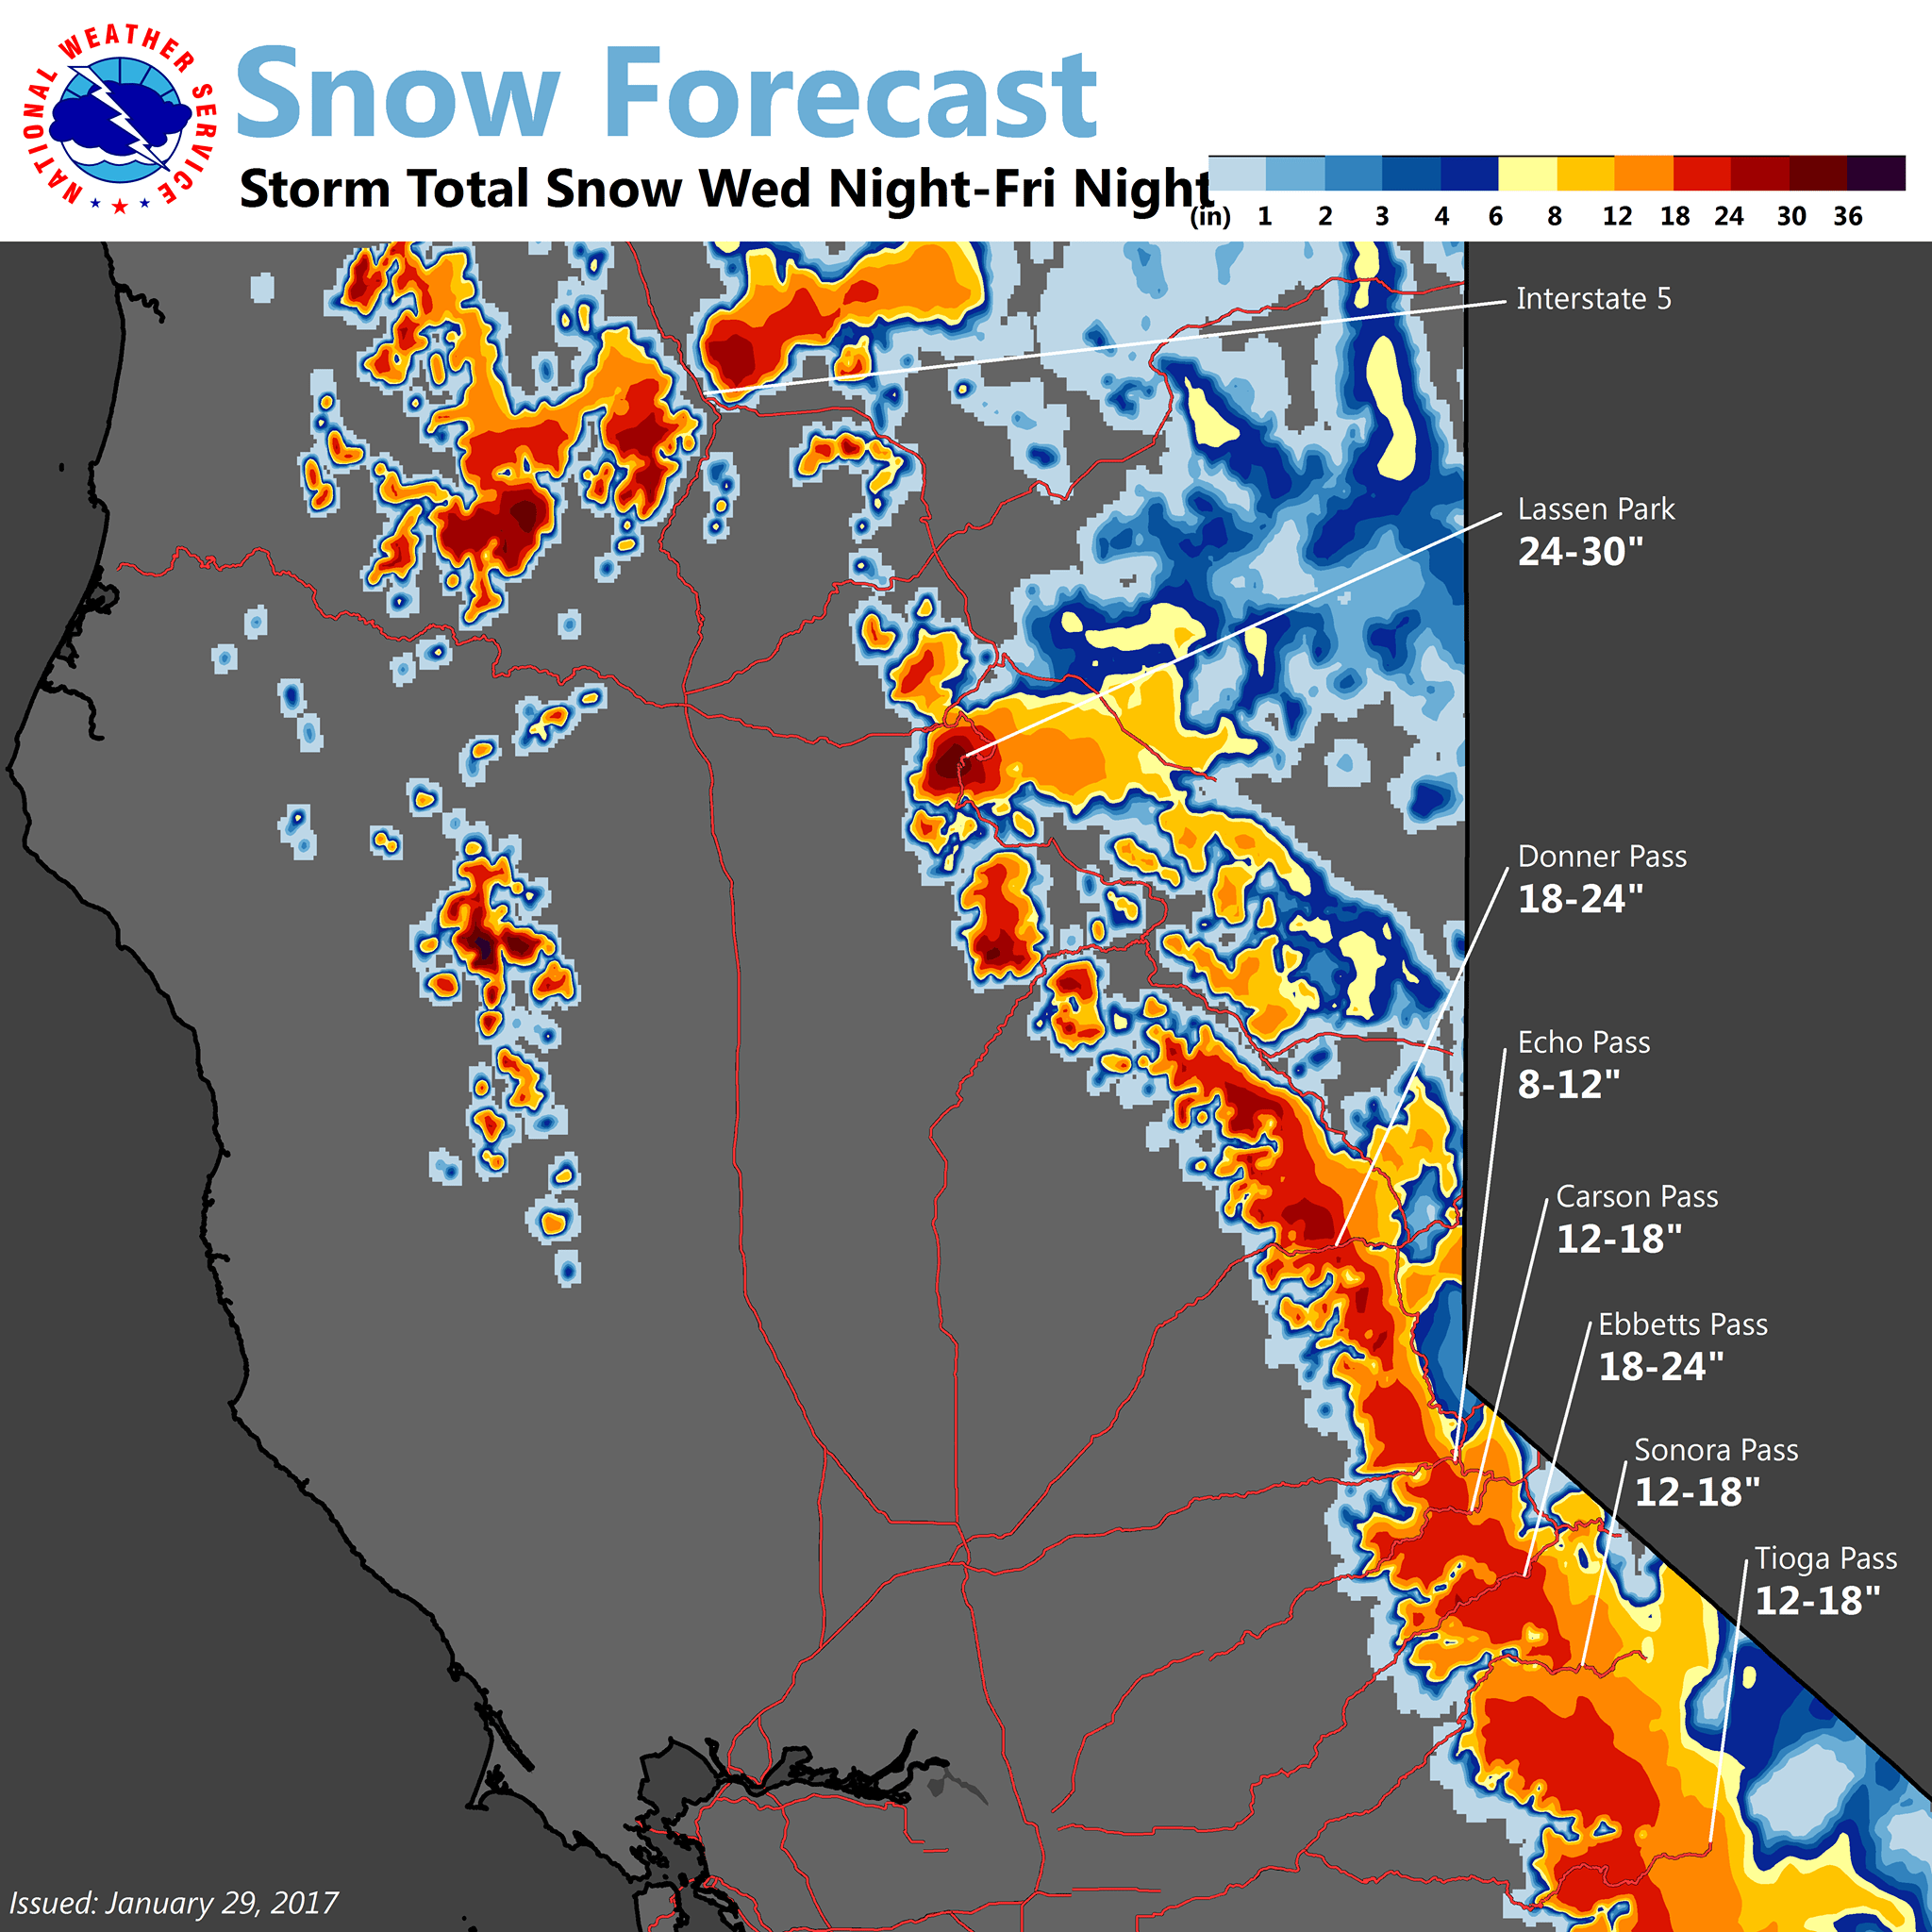 California snowfall totals Wednesday-Friday. Image: NOAA Sacramento, CA Yesterday